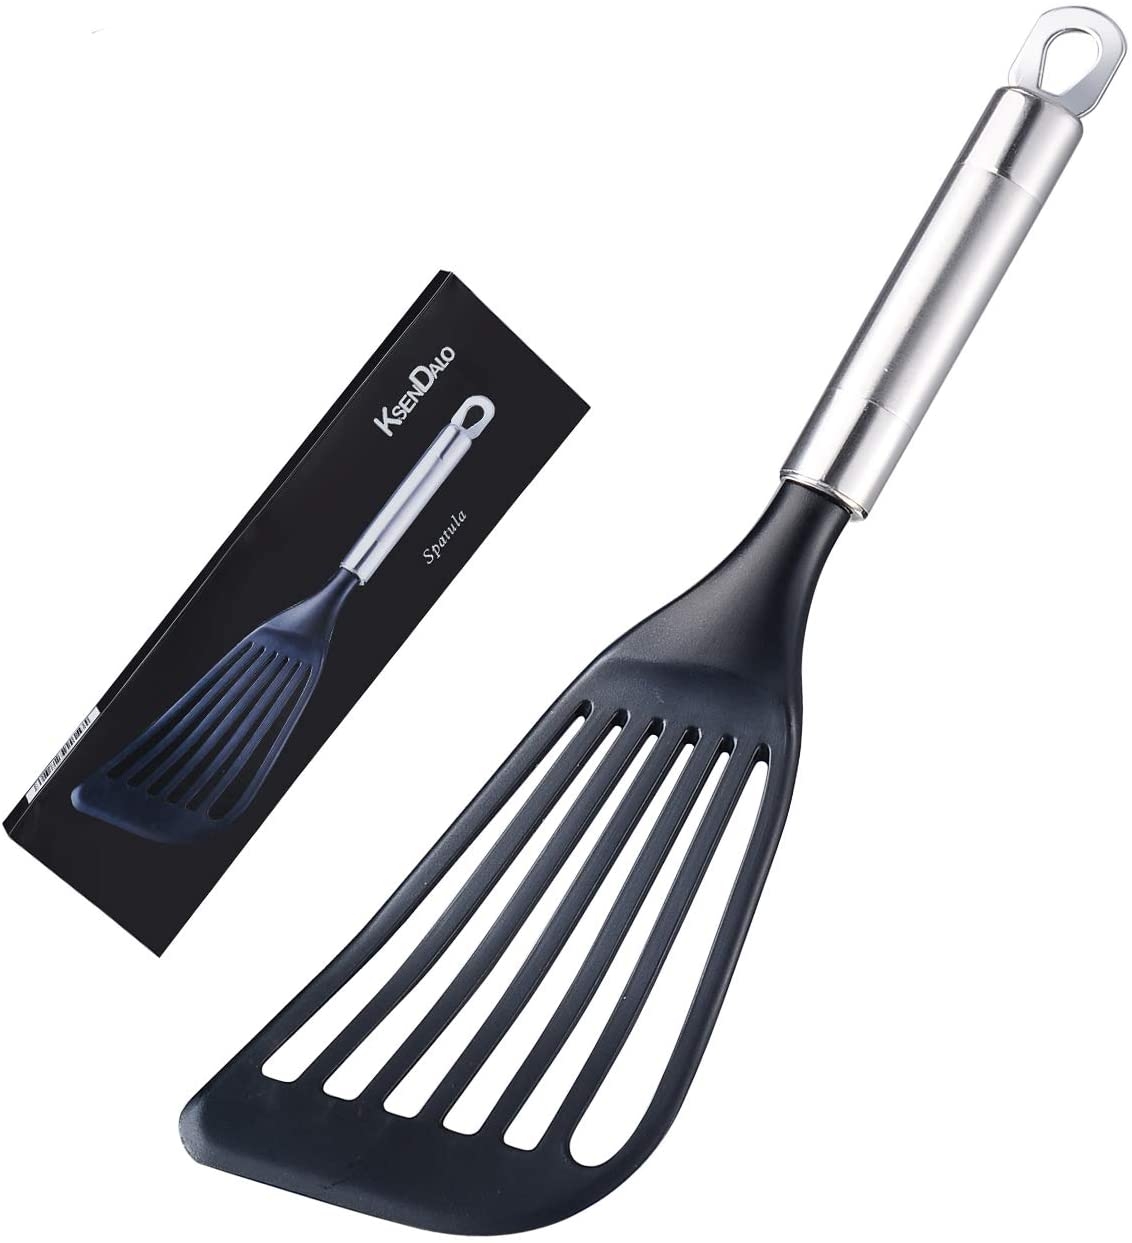 https://visualhunt.com/photos/16/ksendalo-nonstick-spatula-turner-thin-slotted-spatula-wide-nylon-blade-lightweight-but-sturdy-kitchen-fish-spatula-desgin-for-non-stick-pan-black-option-1.jpg